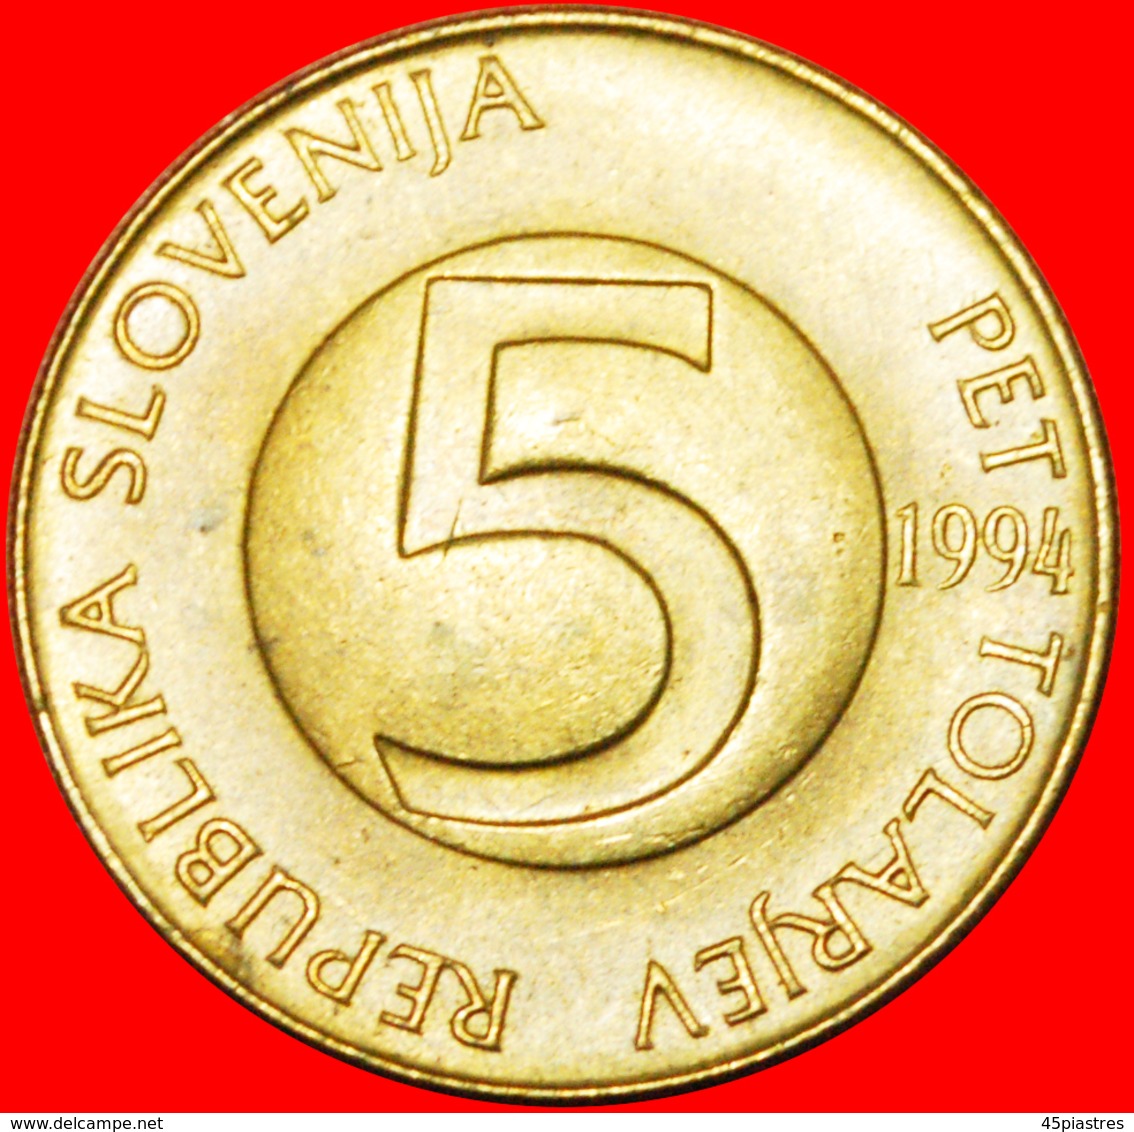 # SLOVAKIA: SLOVENIA ★ 5 TOLARS 1994 MINT LUSTER! LOW START ★ NO RESERVE! - Slovenia